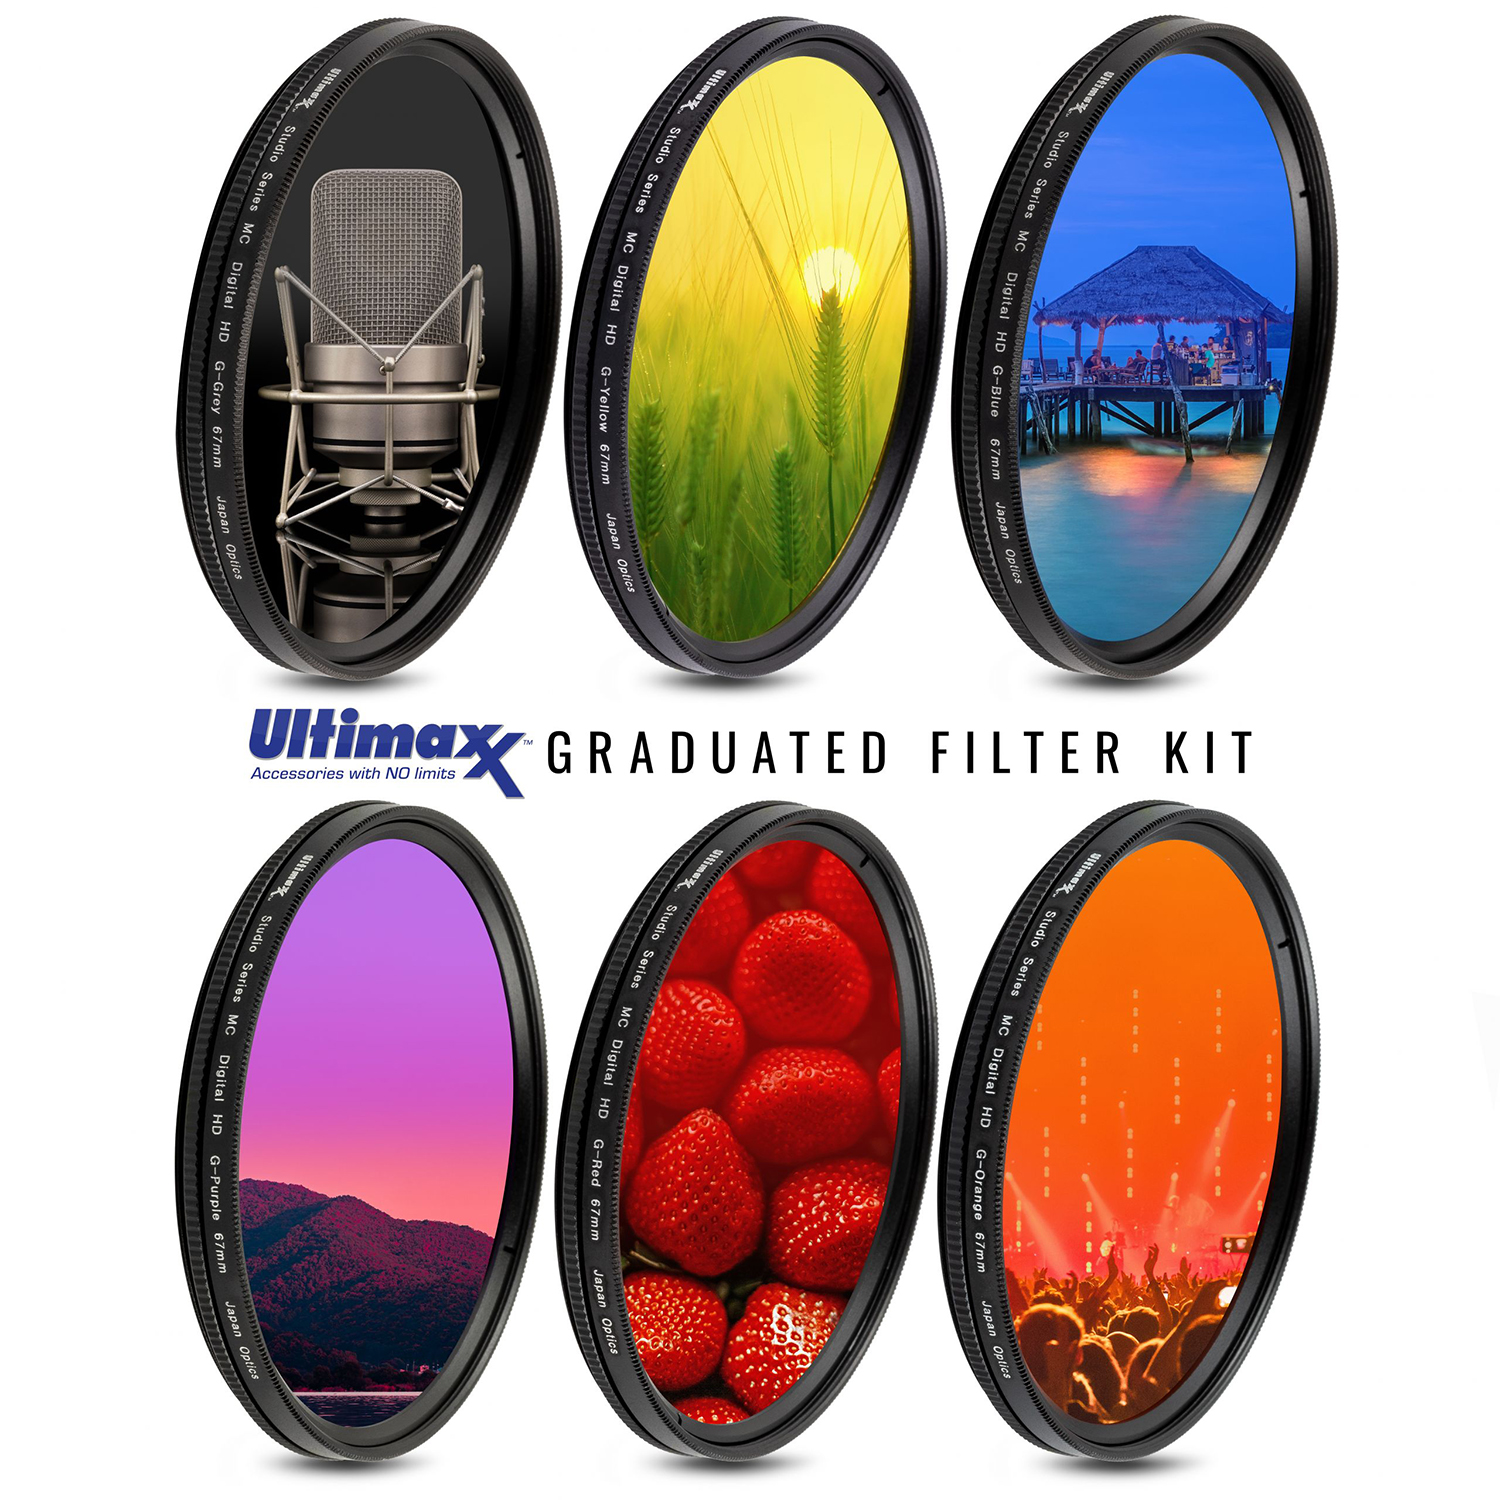 6PC Professional Gradual Color Filter Kit